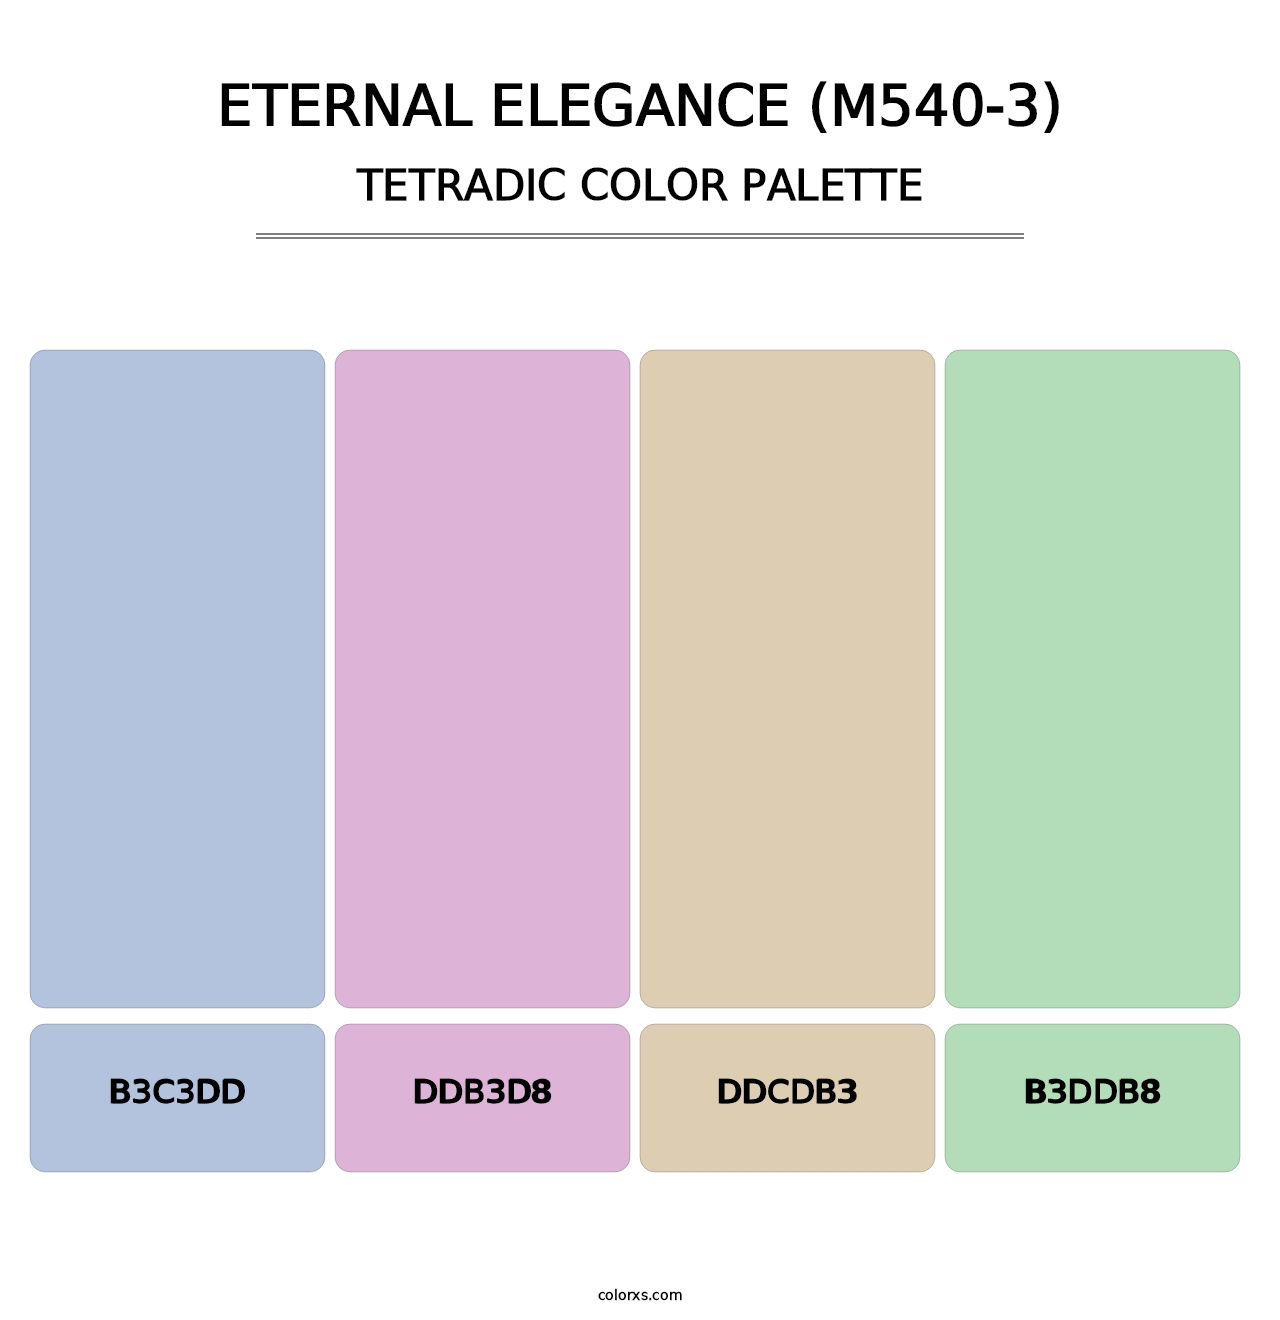 Eternal Elegance (M540-3) - Tetradic Color Palette